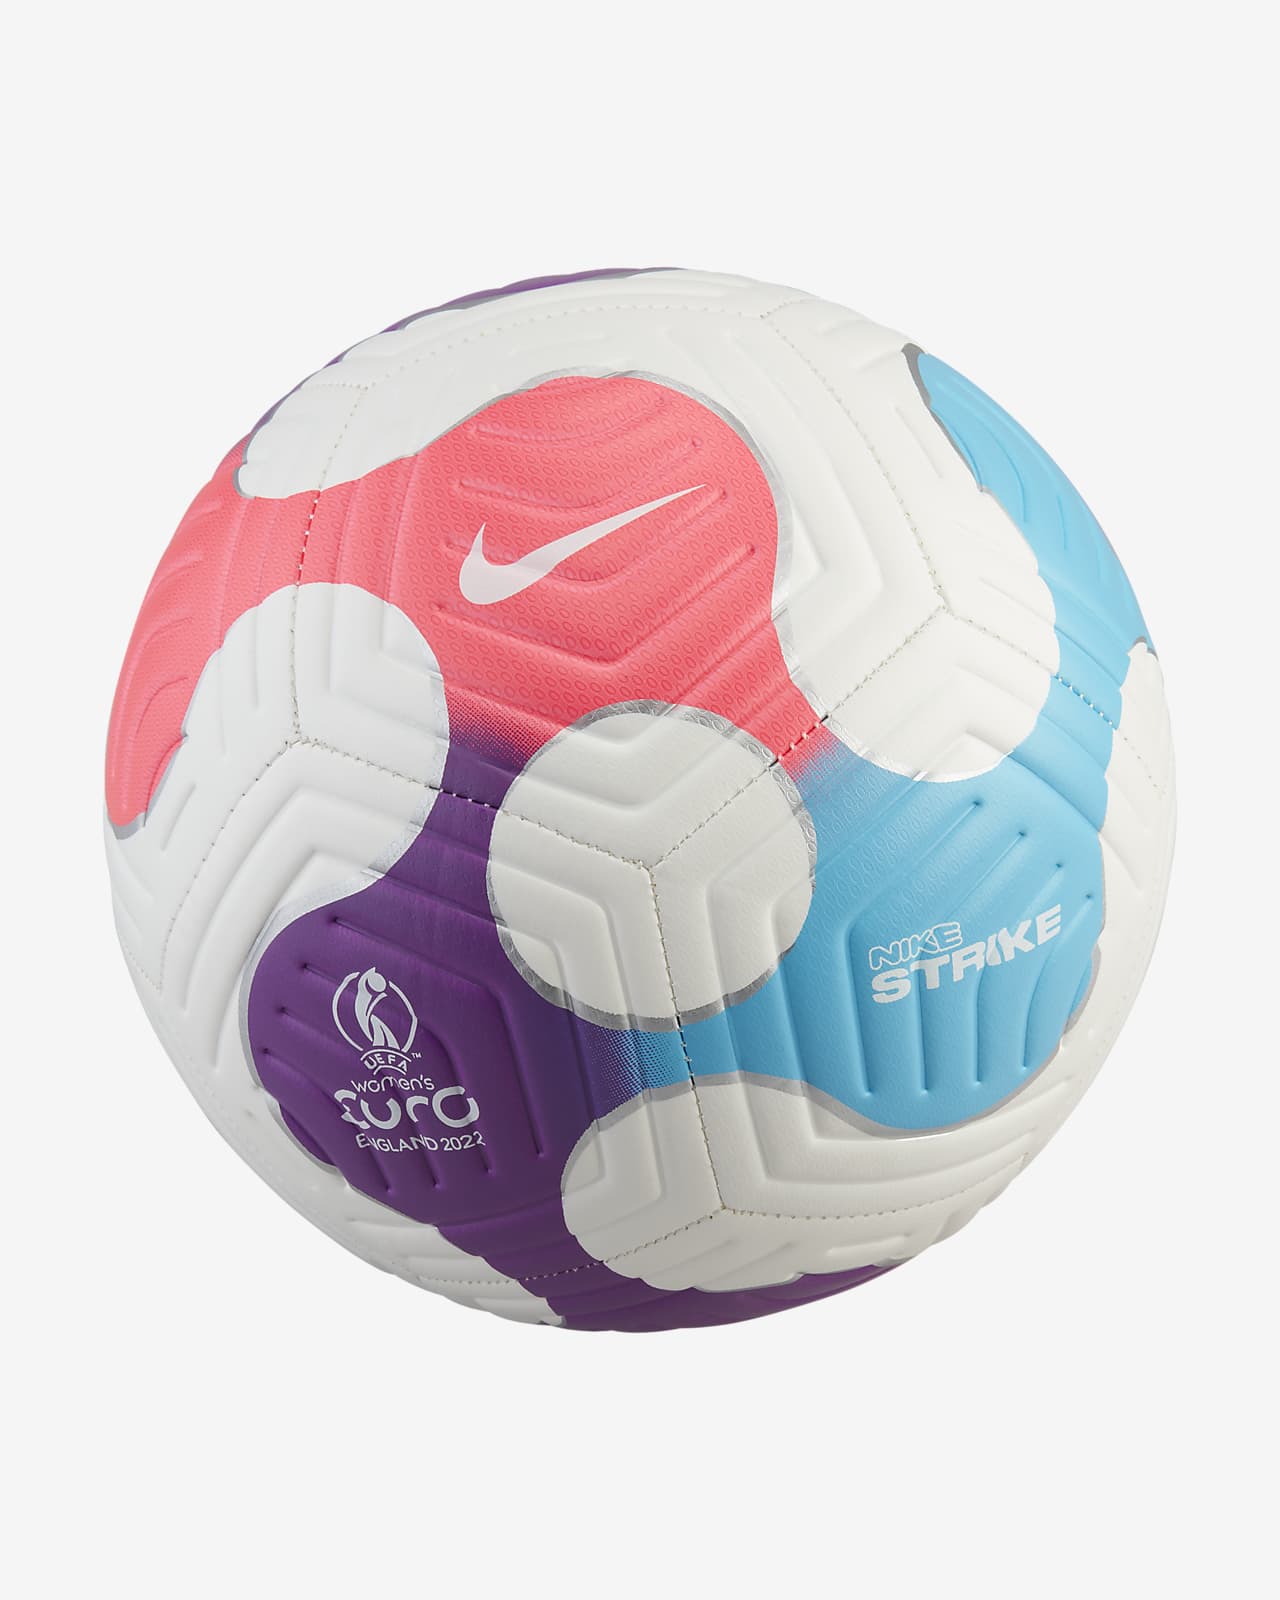 UEFA Women's EURO 2022 Nike Strike Football